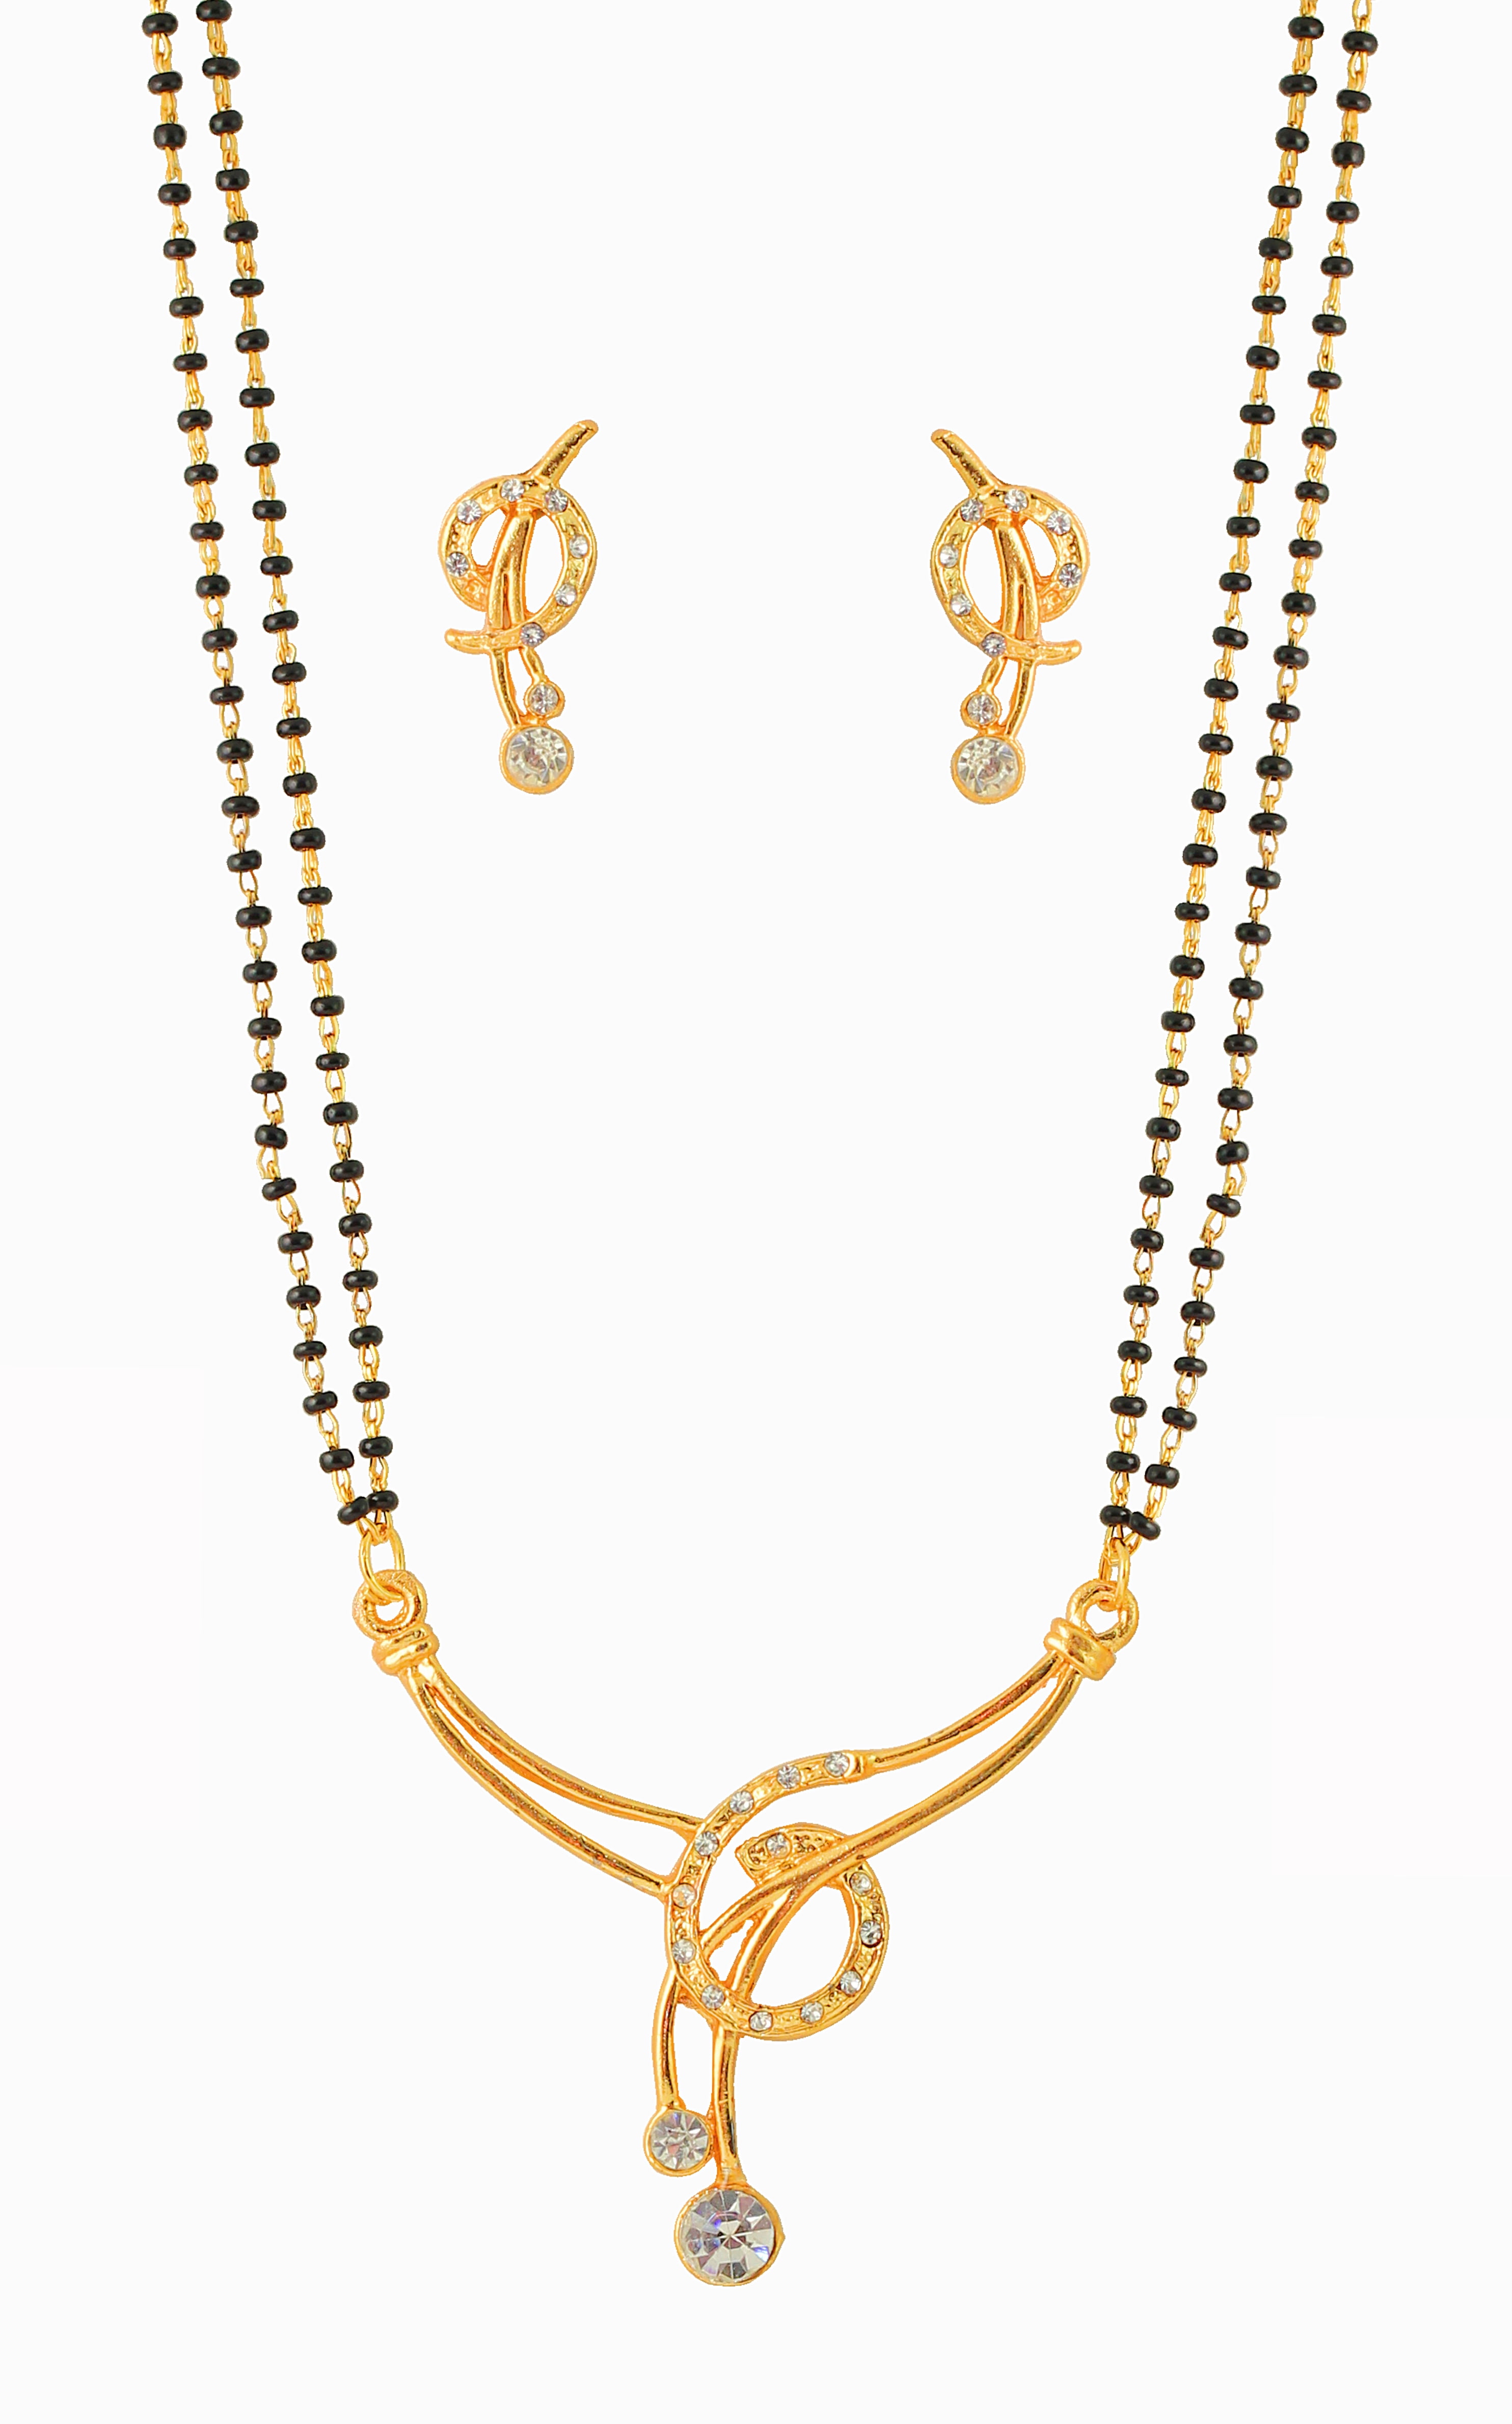 Touchstone Gold Tone Indian Bollywood White Rhinestones Black Beads Ethnic mangalsutra Necklace Set Jewelry for Women 